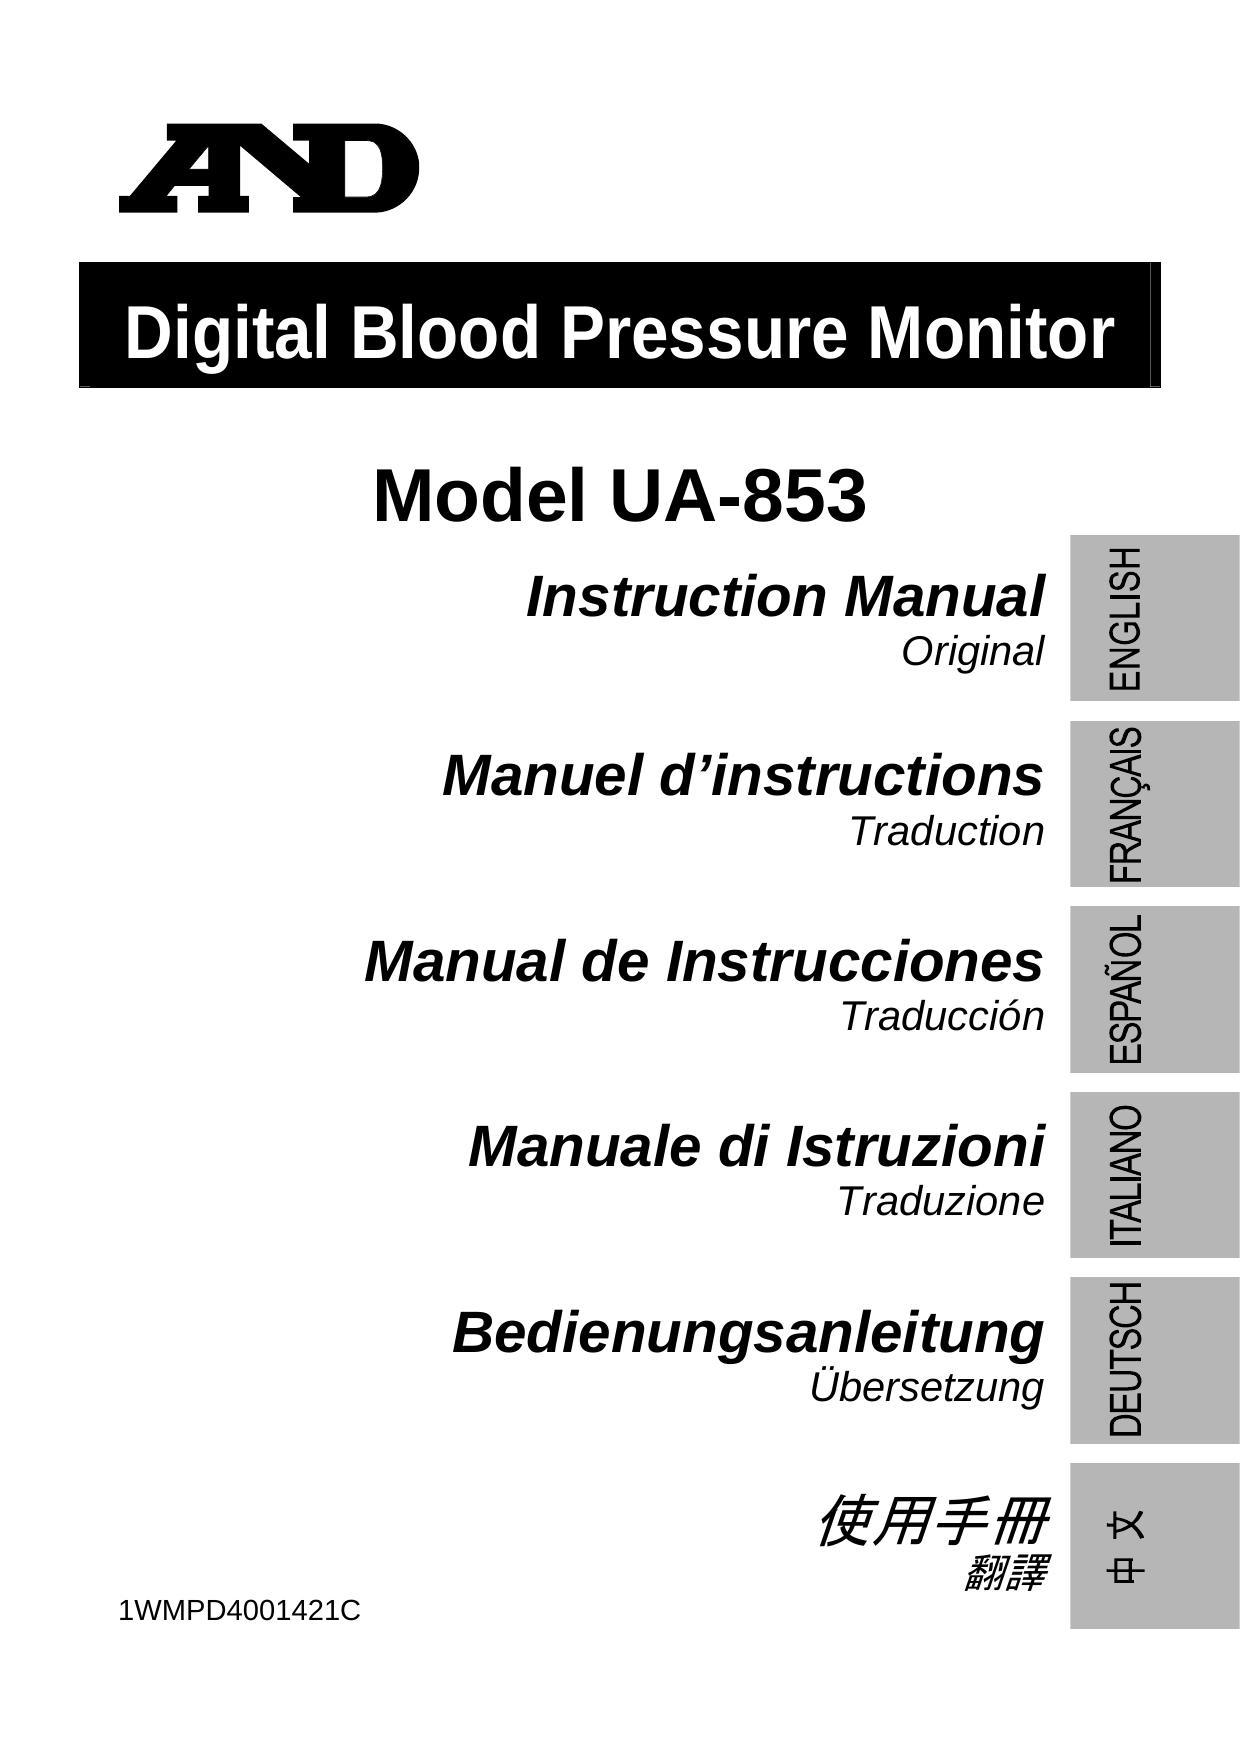 ad-digital-blood-pressure-monitor-model-ua-853-instruction-manual.pdf